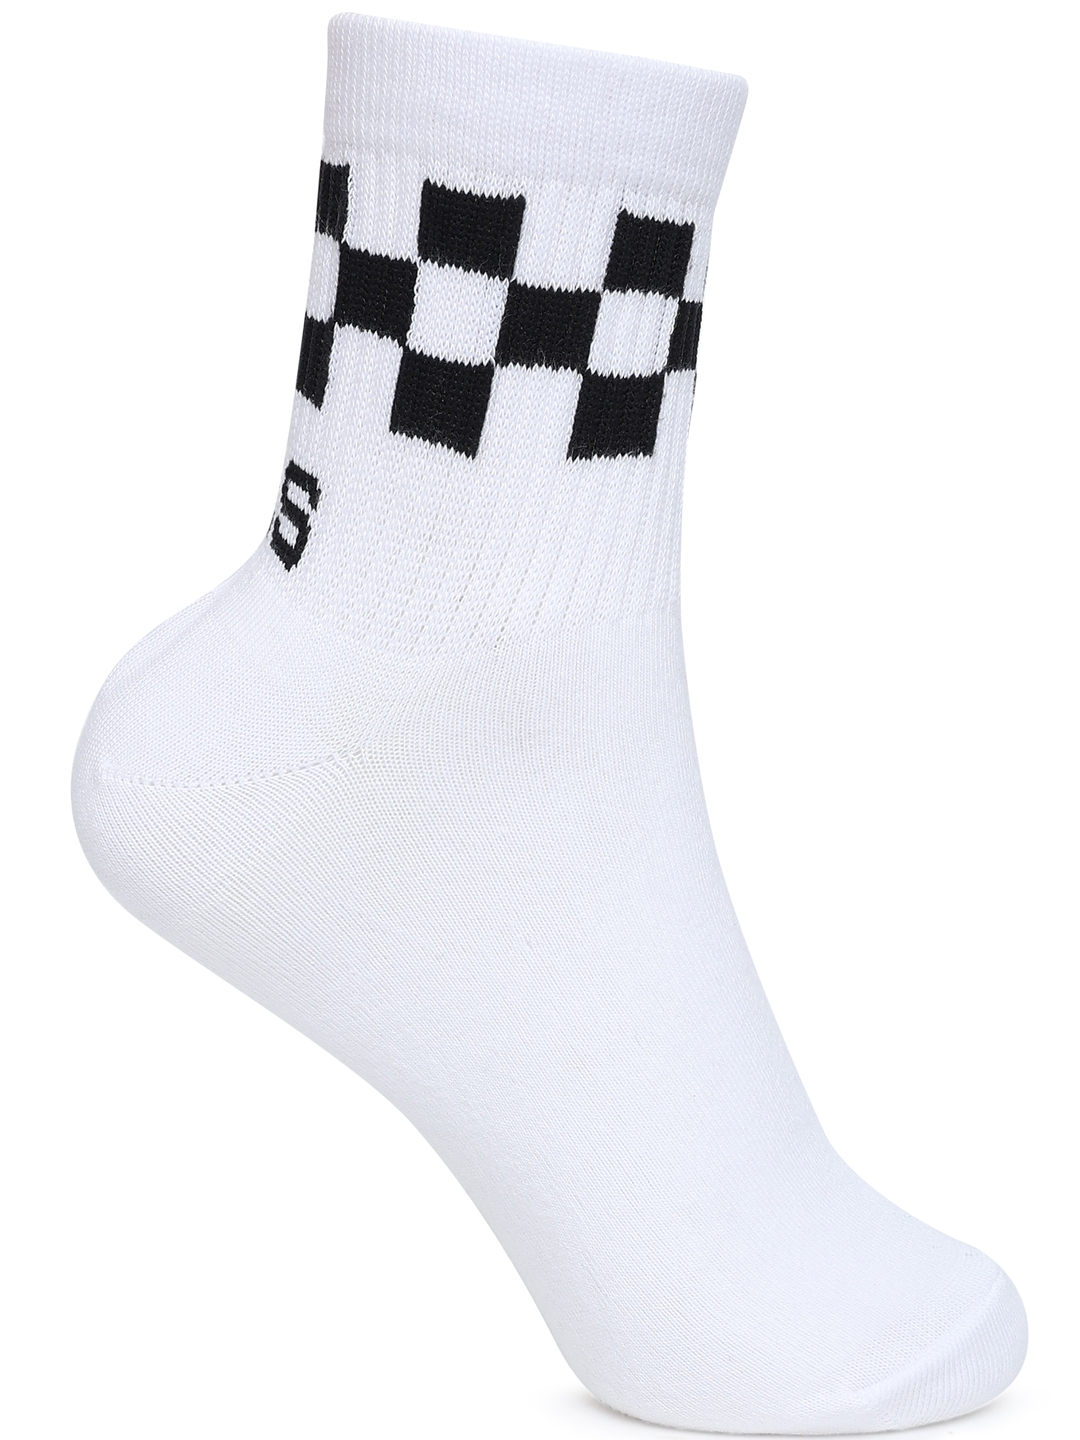 RETO IN Black & White Check Socks (Pack of 2)